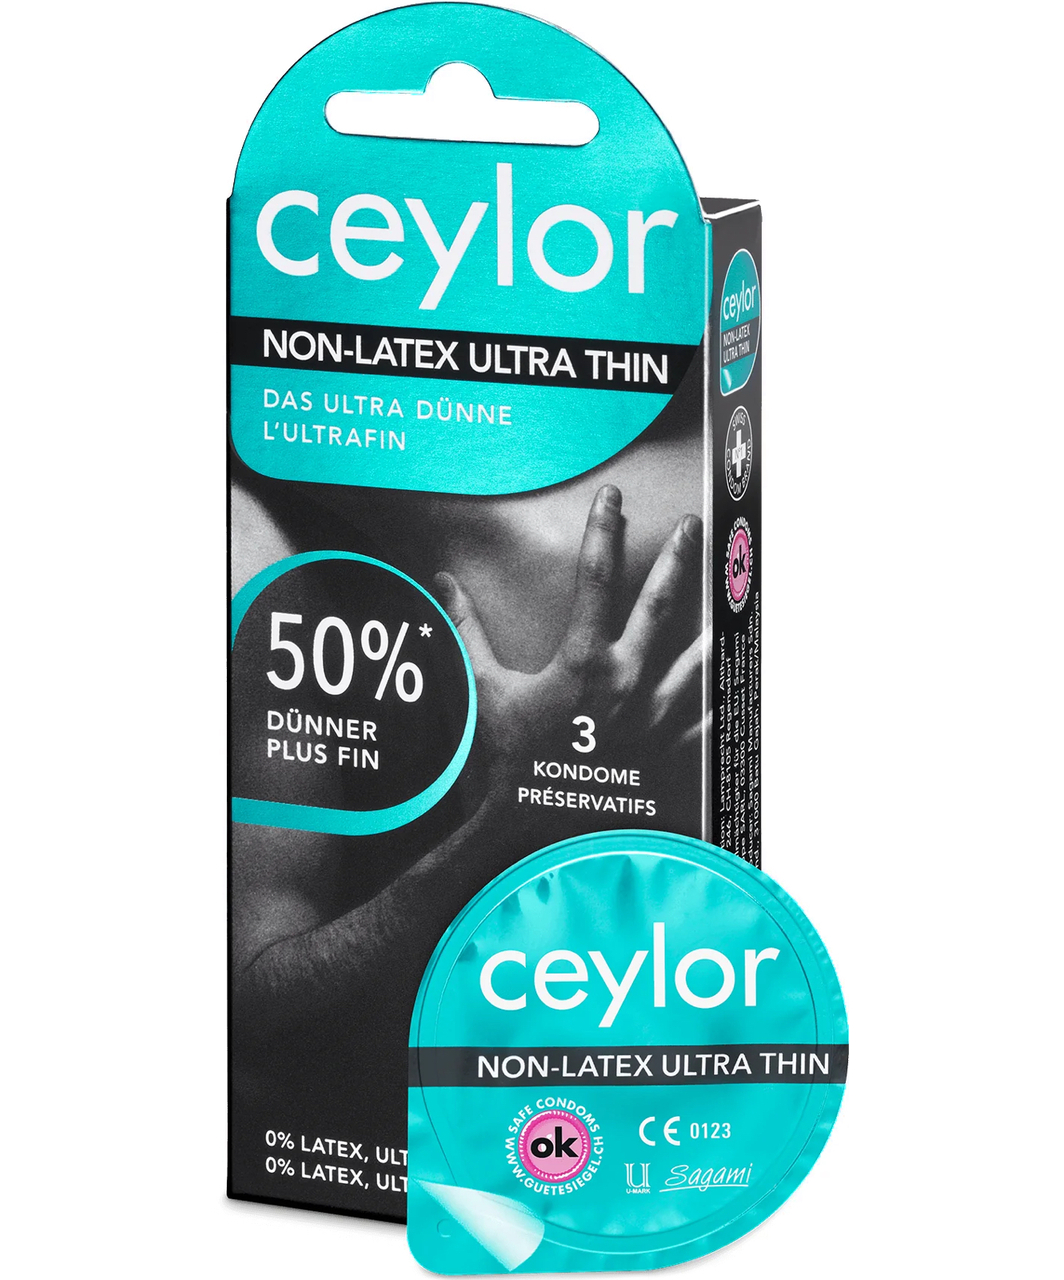 Ceylor Non-Latex Ultra Thin презервативы (3 / 6 шт.)